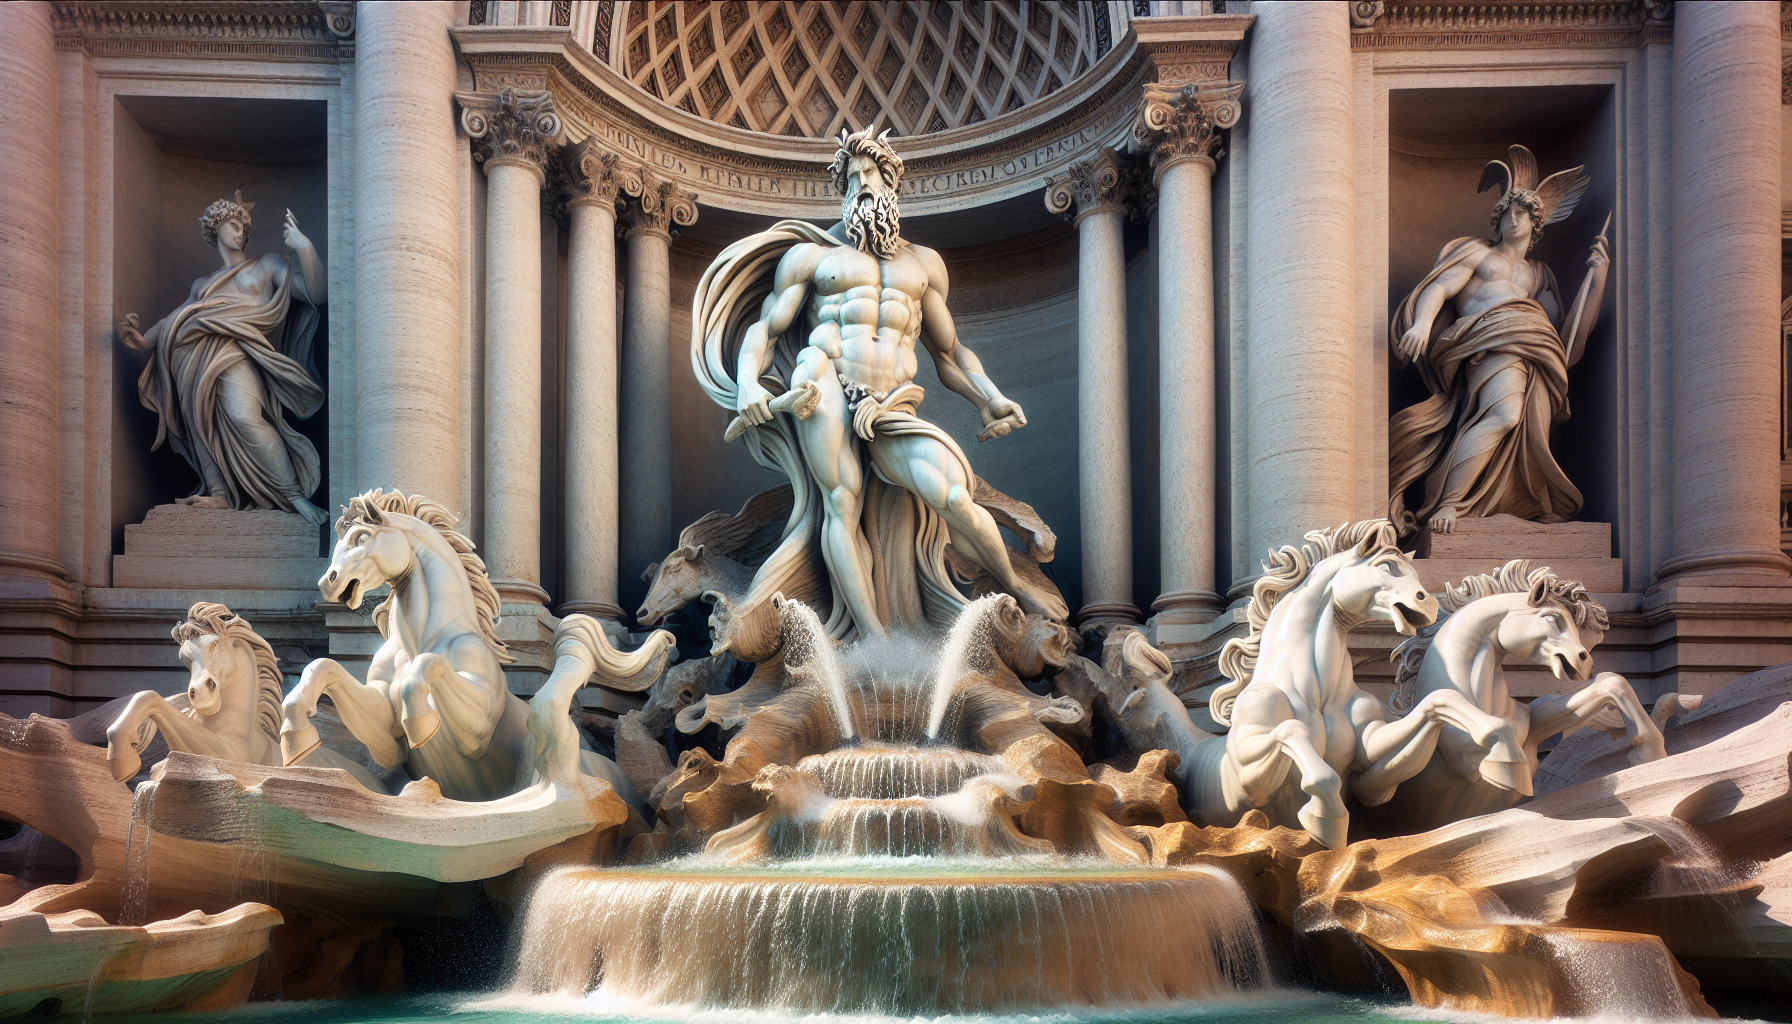 Sculpture of Oceanus, Greek sea god at Trevi Fountain